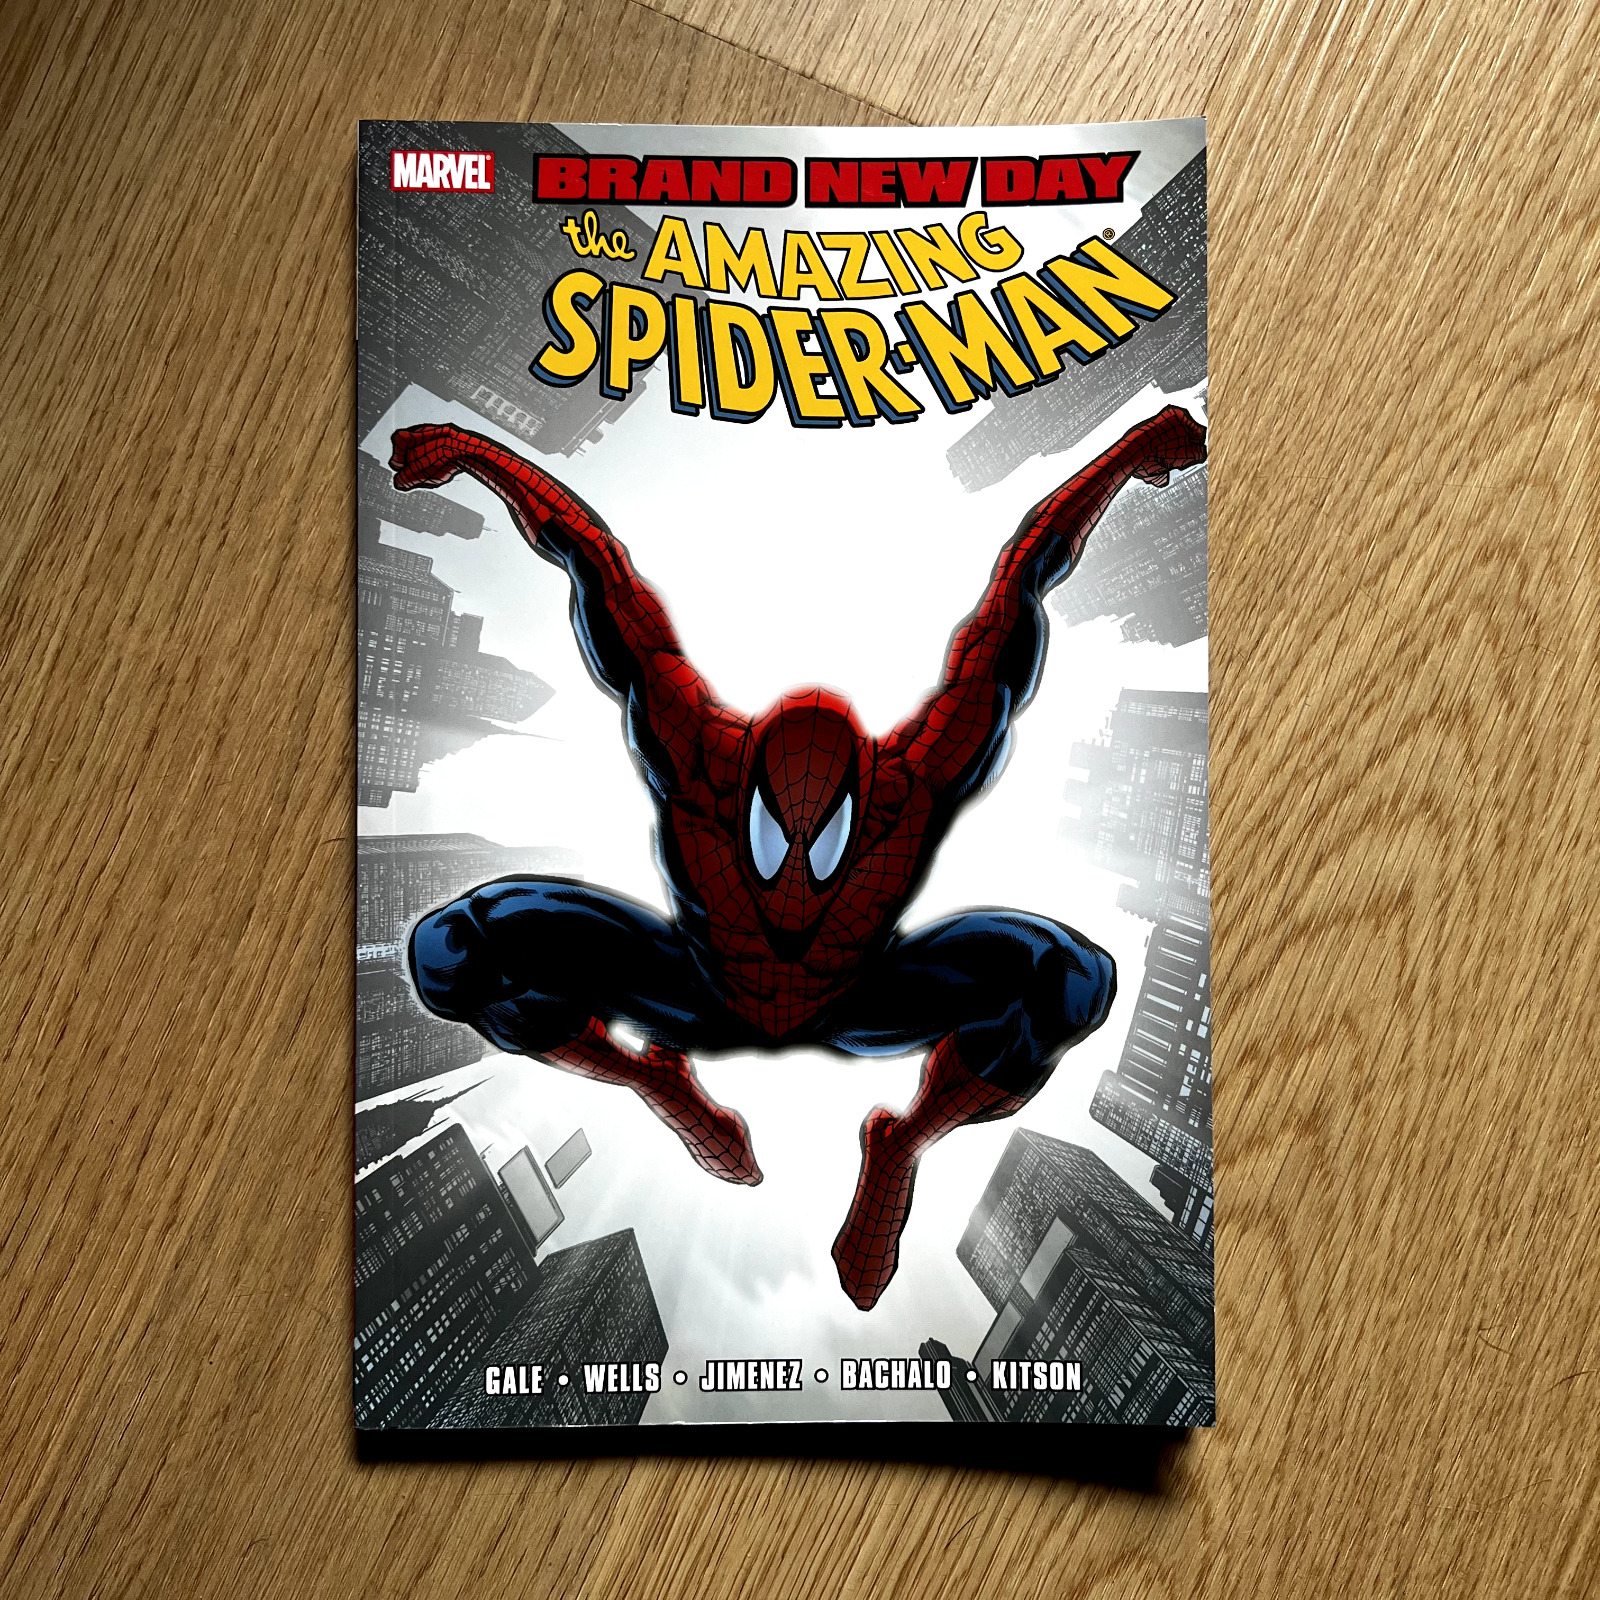 Spider-Man: Brand New Day #2 (Marvel Comics December 2008)